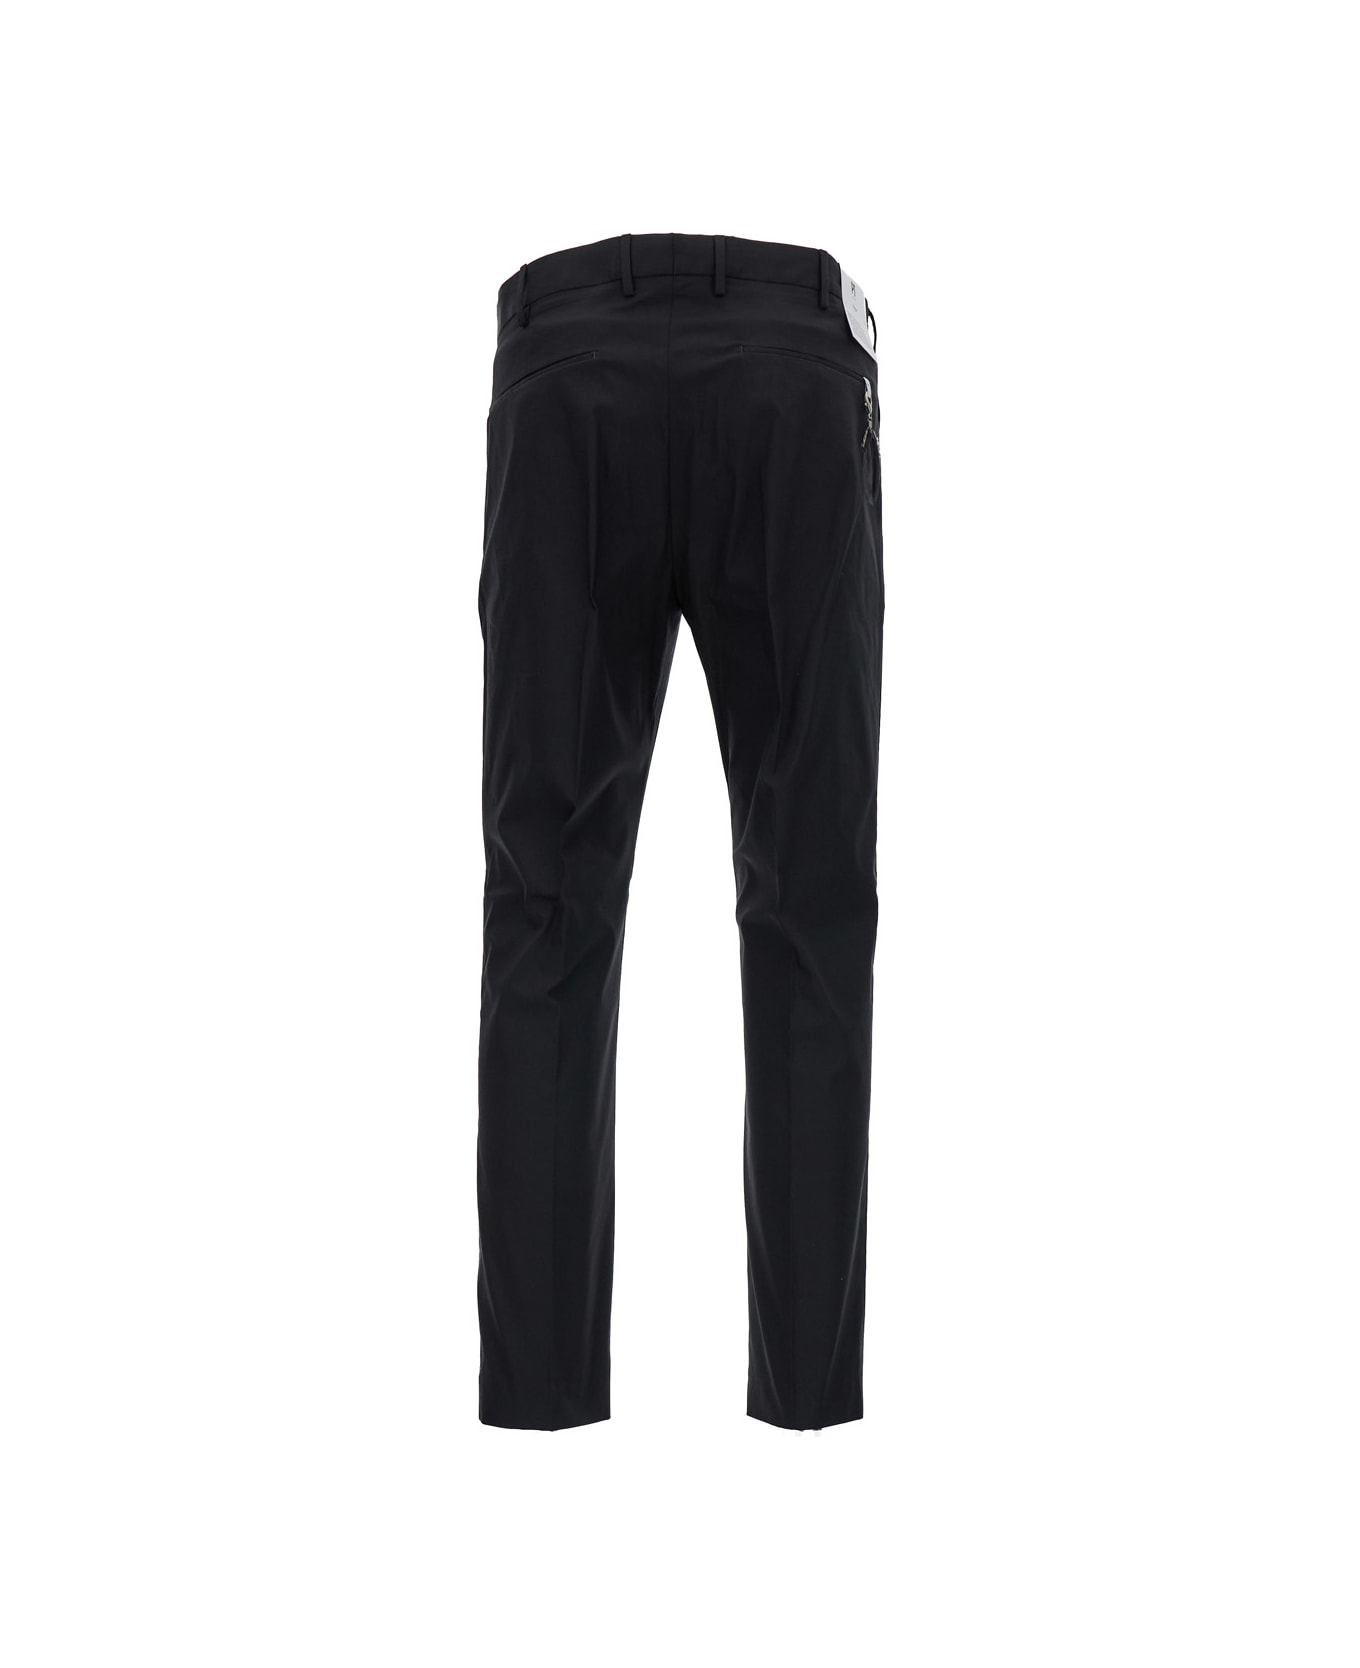 PT Torino Black Slim Cut Tailored Trousers In Cotton Blend Man - Black